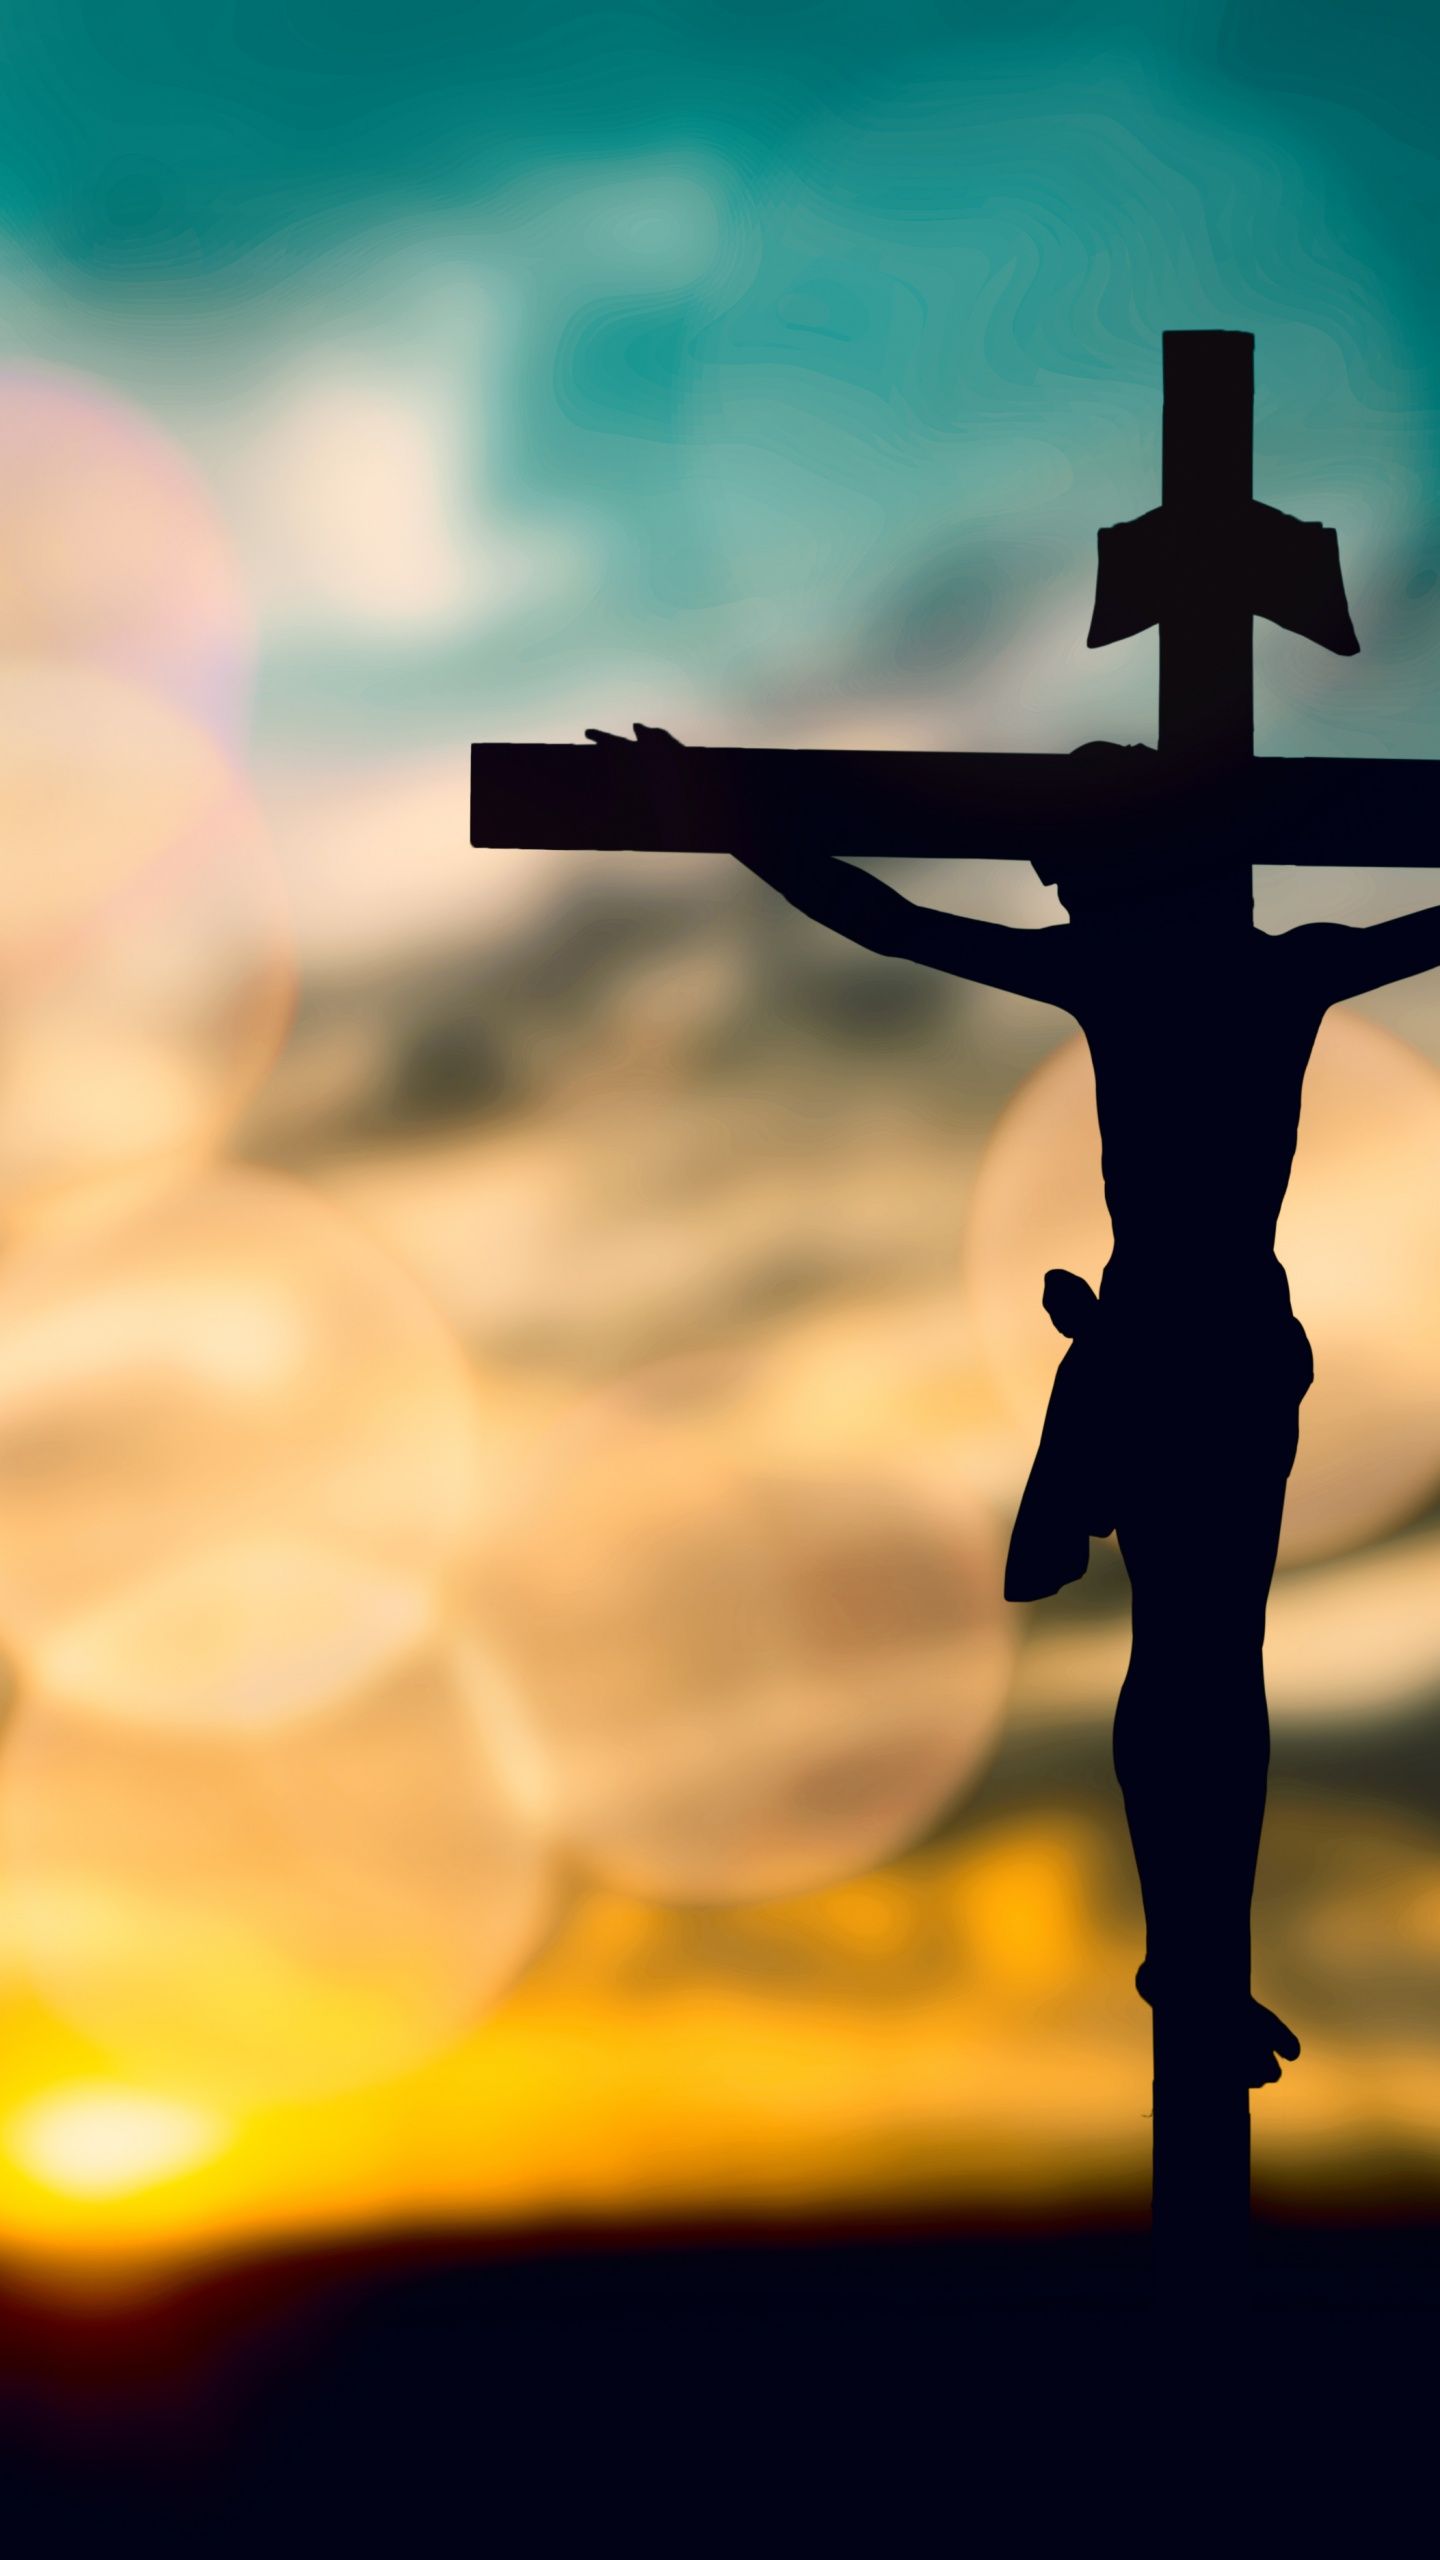 Jesus on the cross at sunset - Jesus, cross